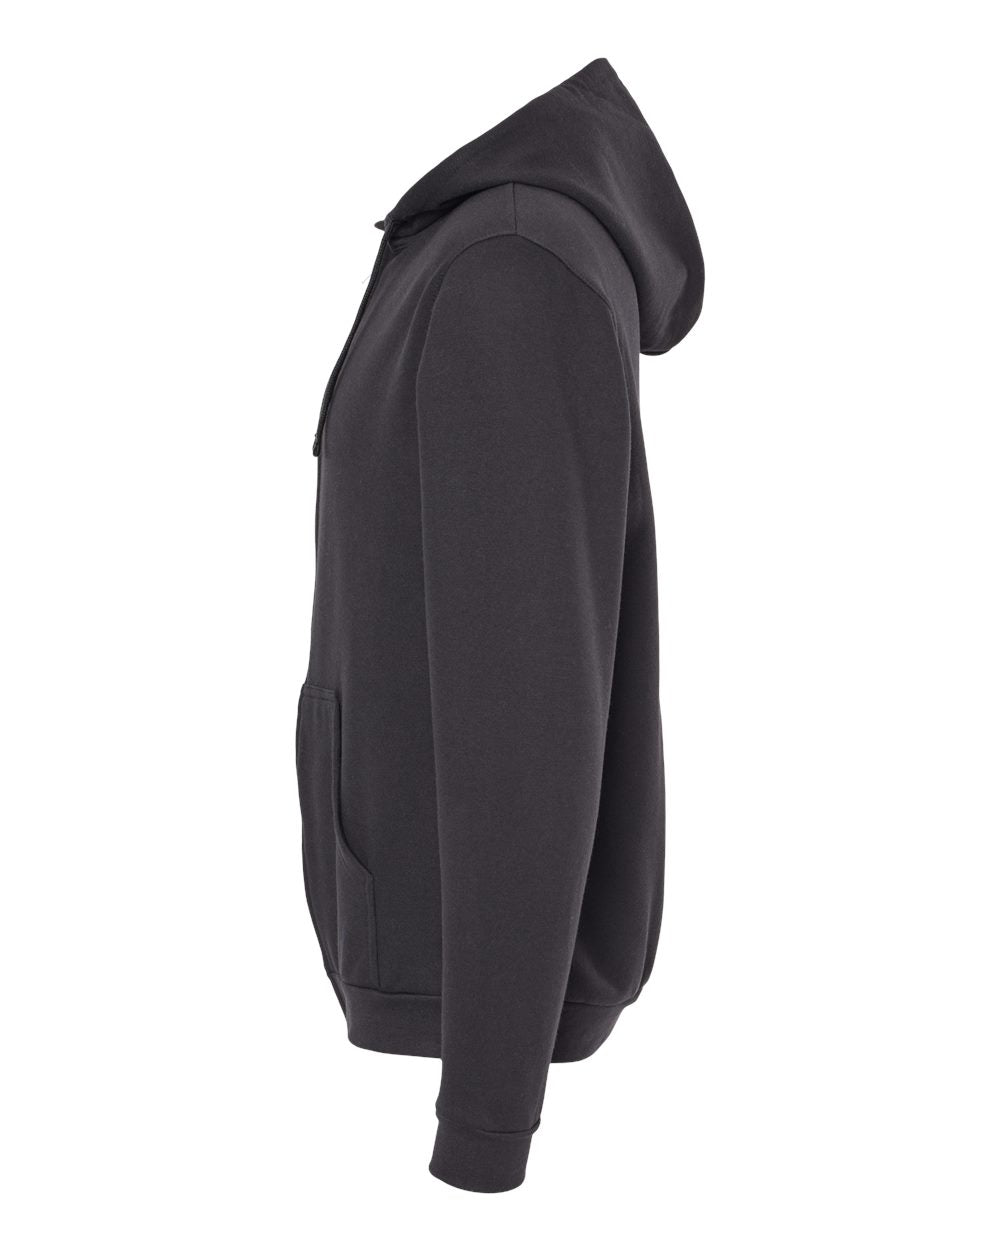 M&O Unisex Zipper Fleece Hoodie 3331 #color_Black